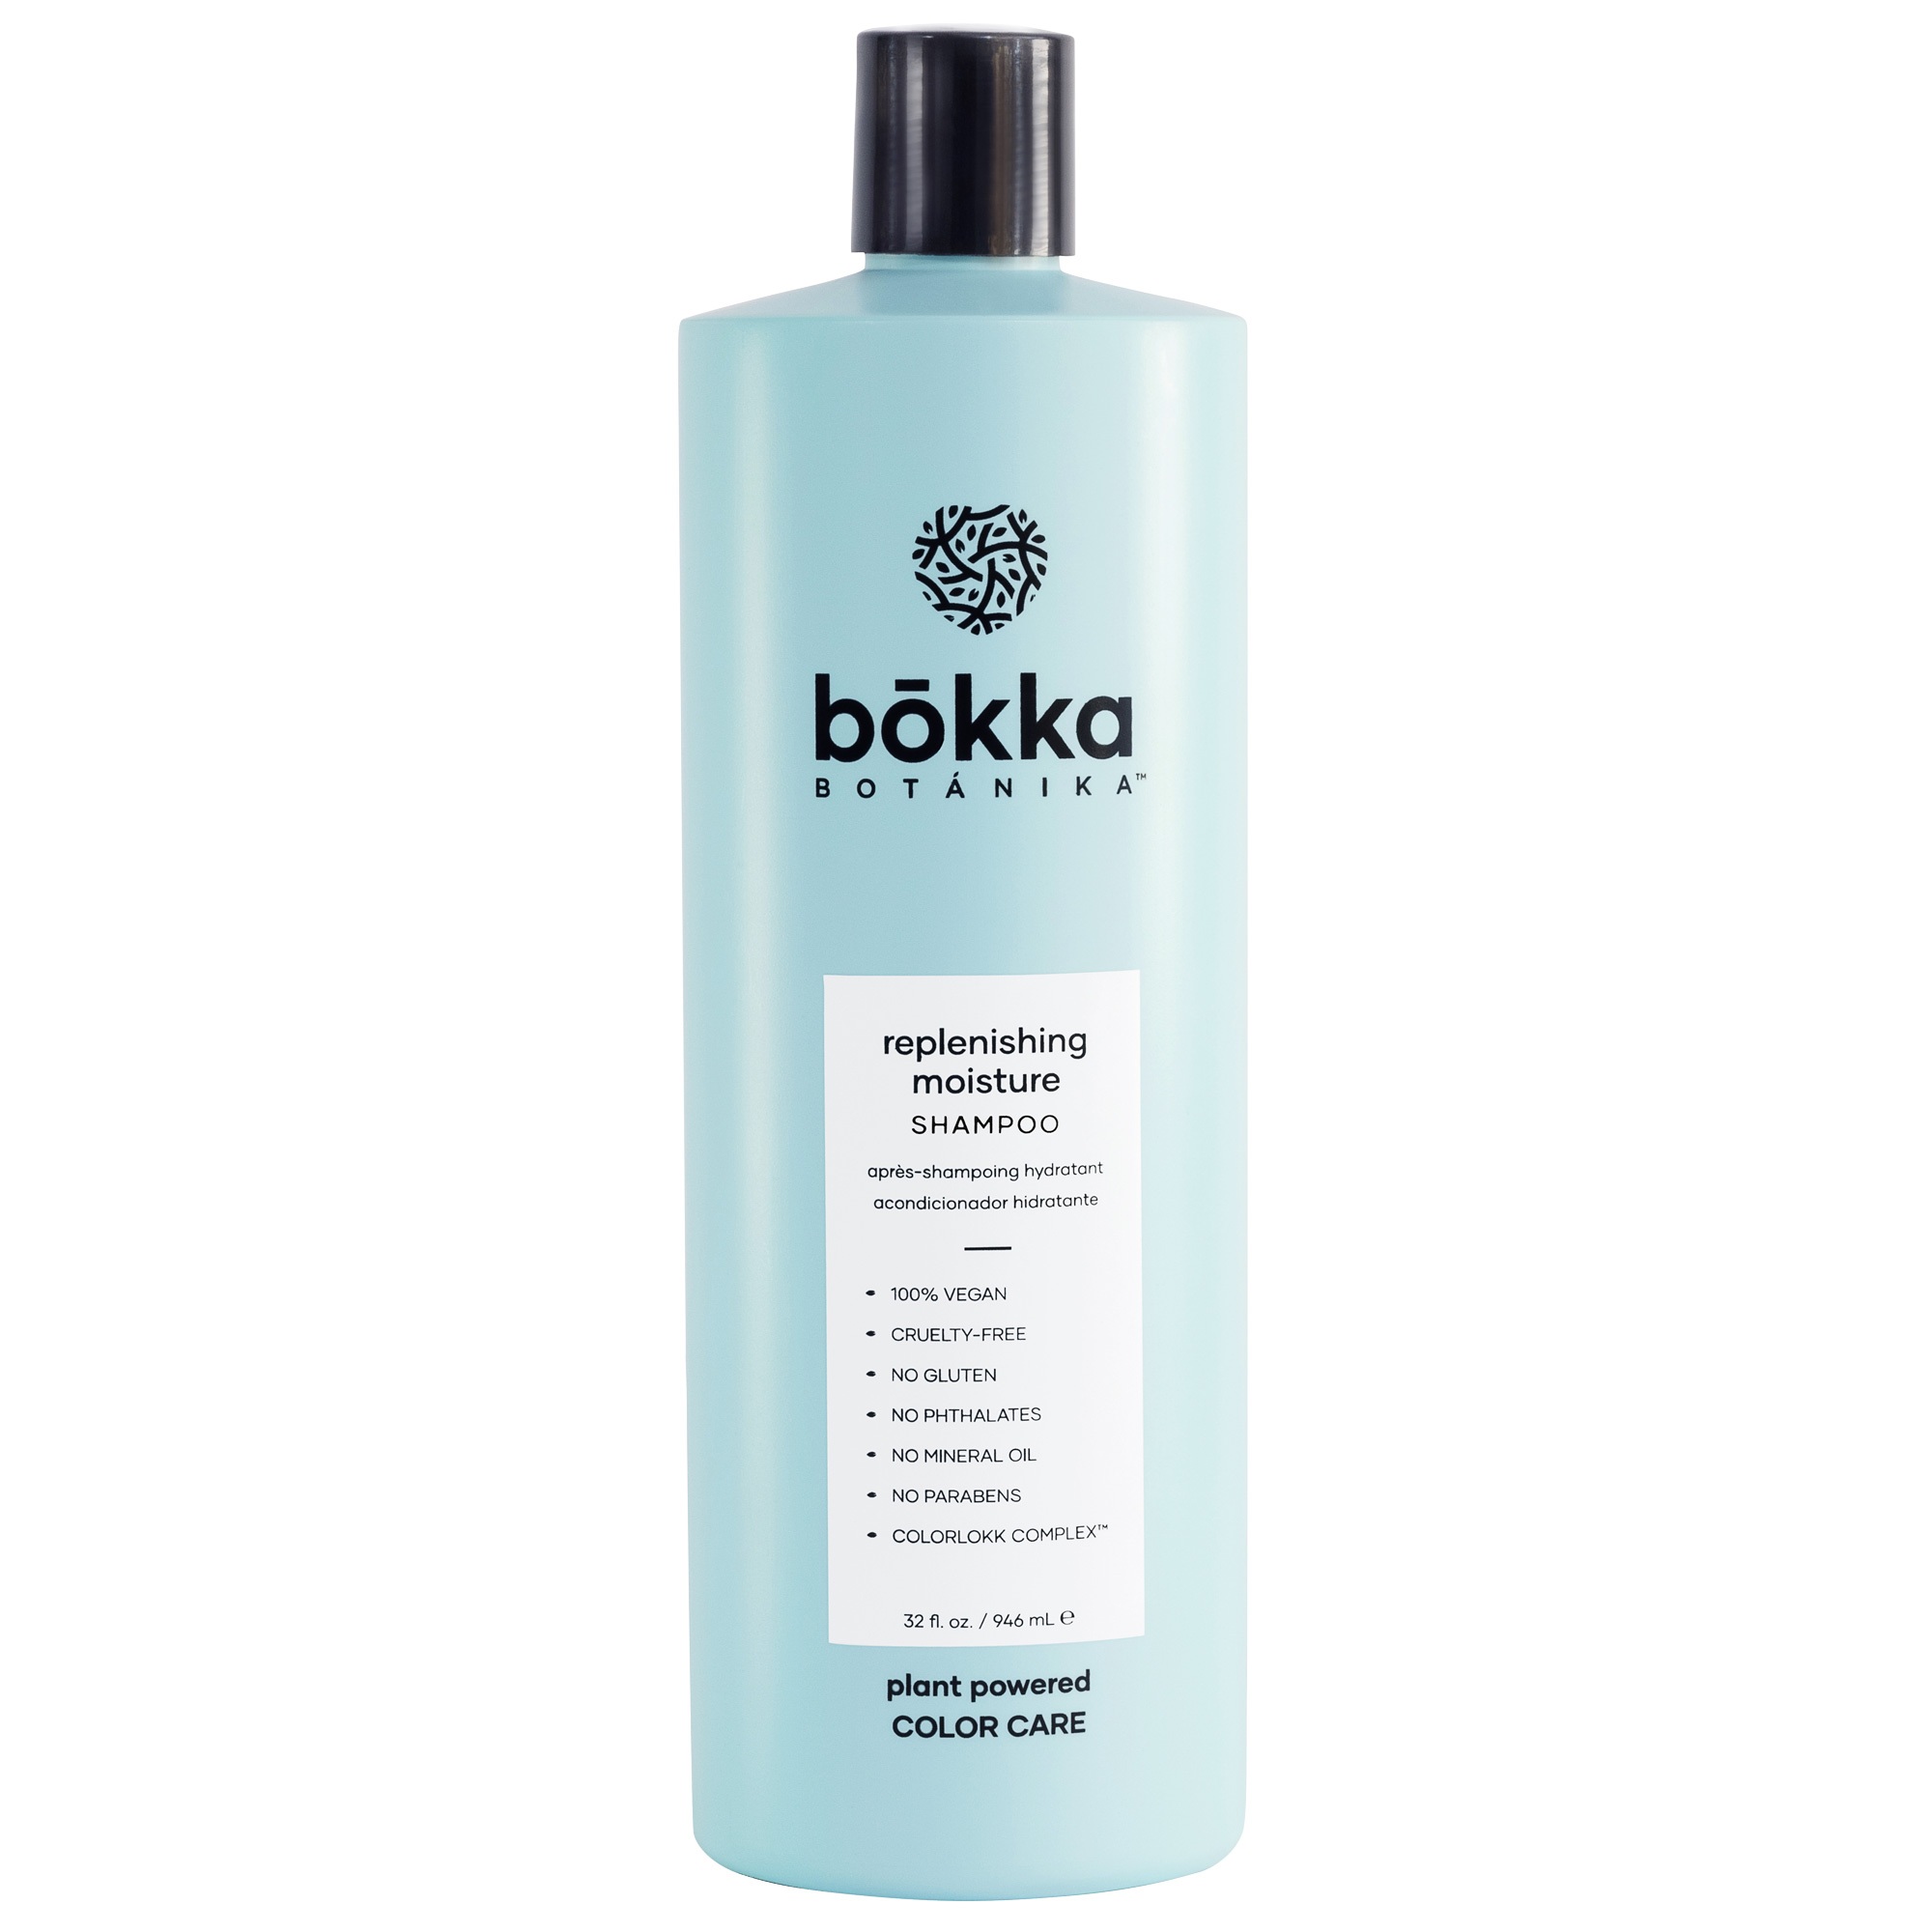 bokka BOTANIKA Replenishing Moisture Shampoo